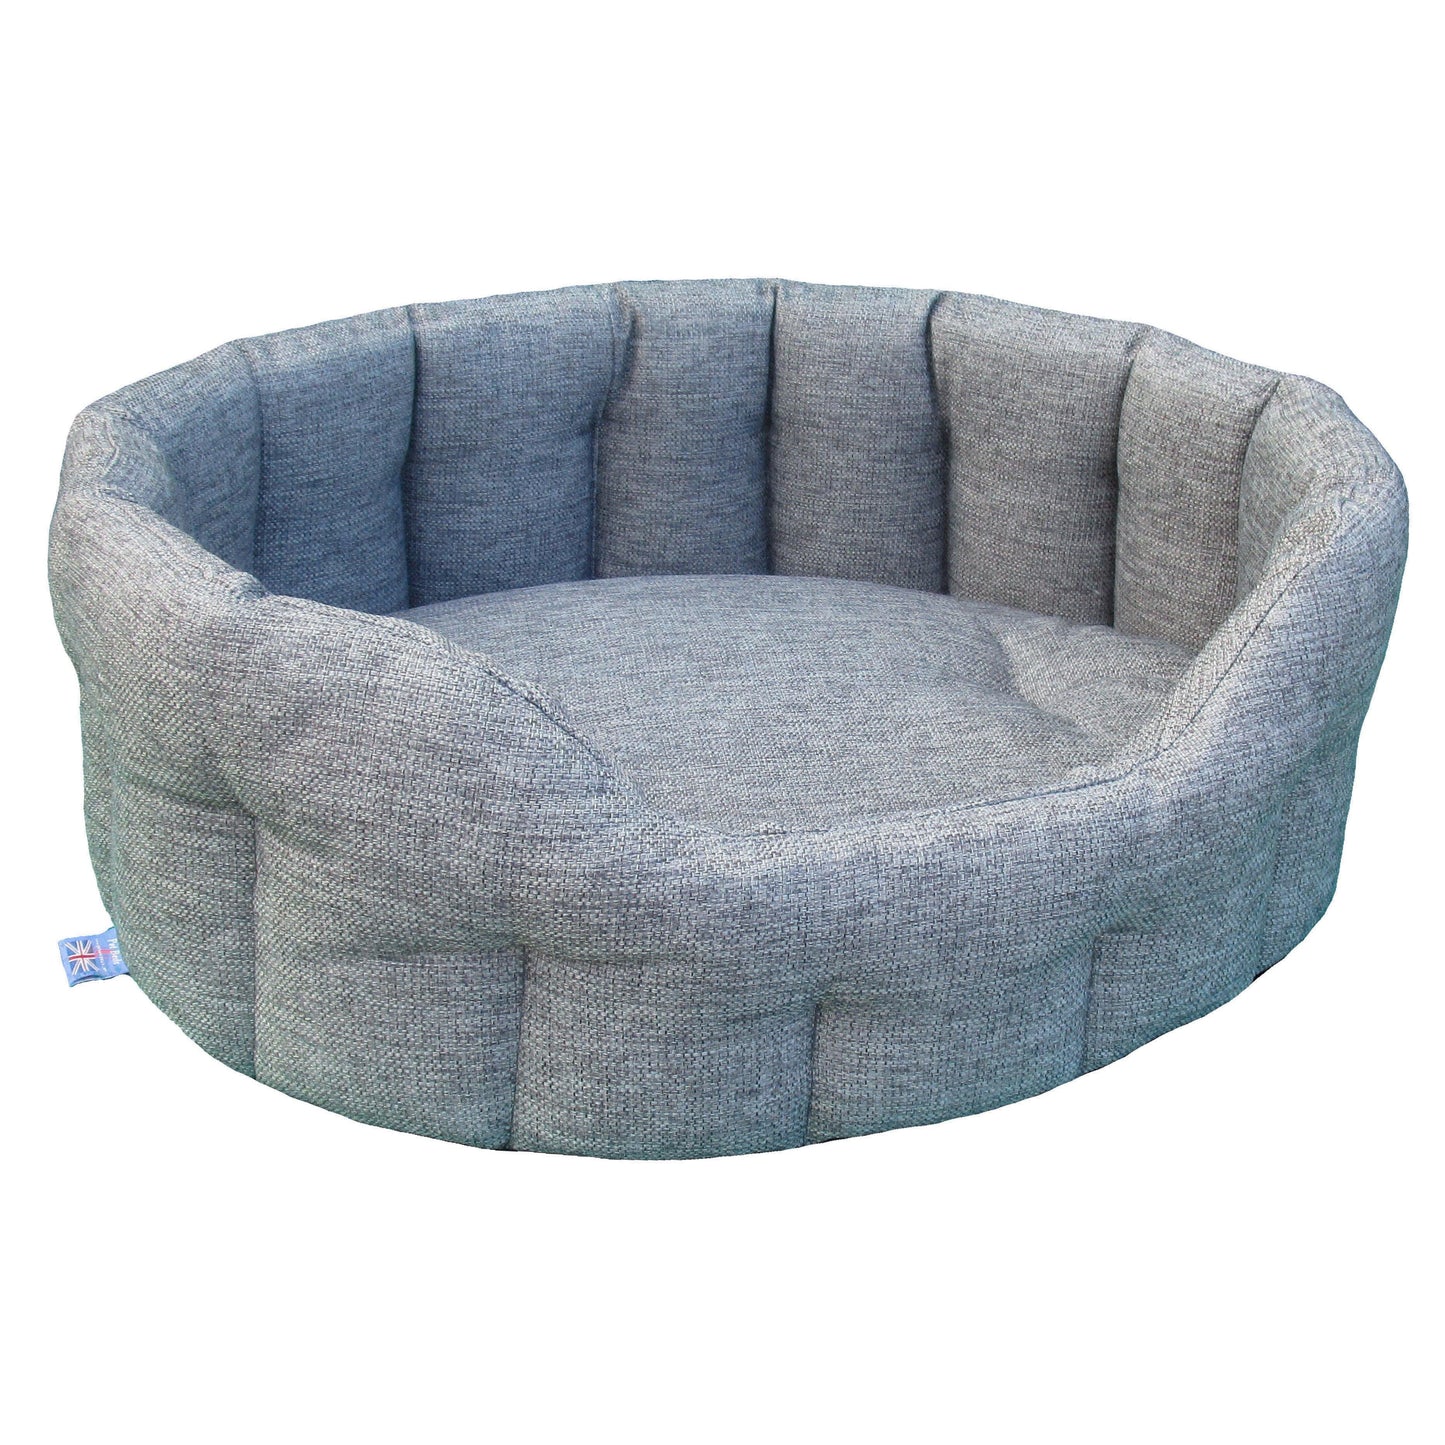 P&L Premium Heavy Duty Oval Basket Weave Dog Bed - Dog Bed Outlet